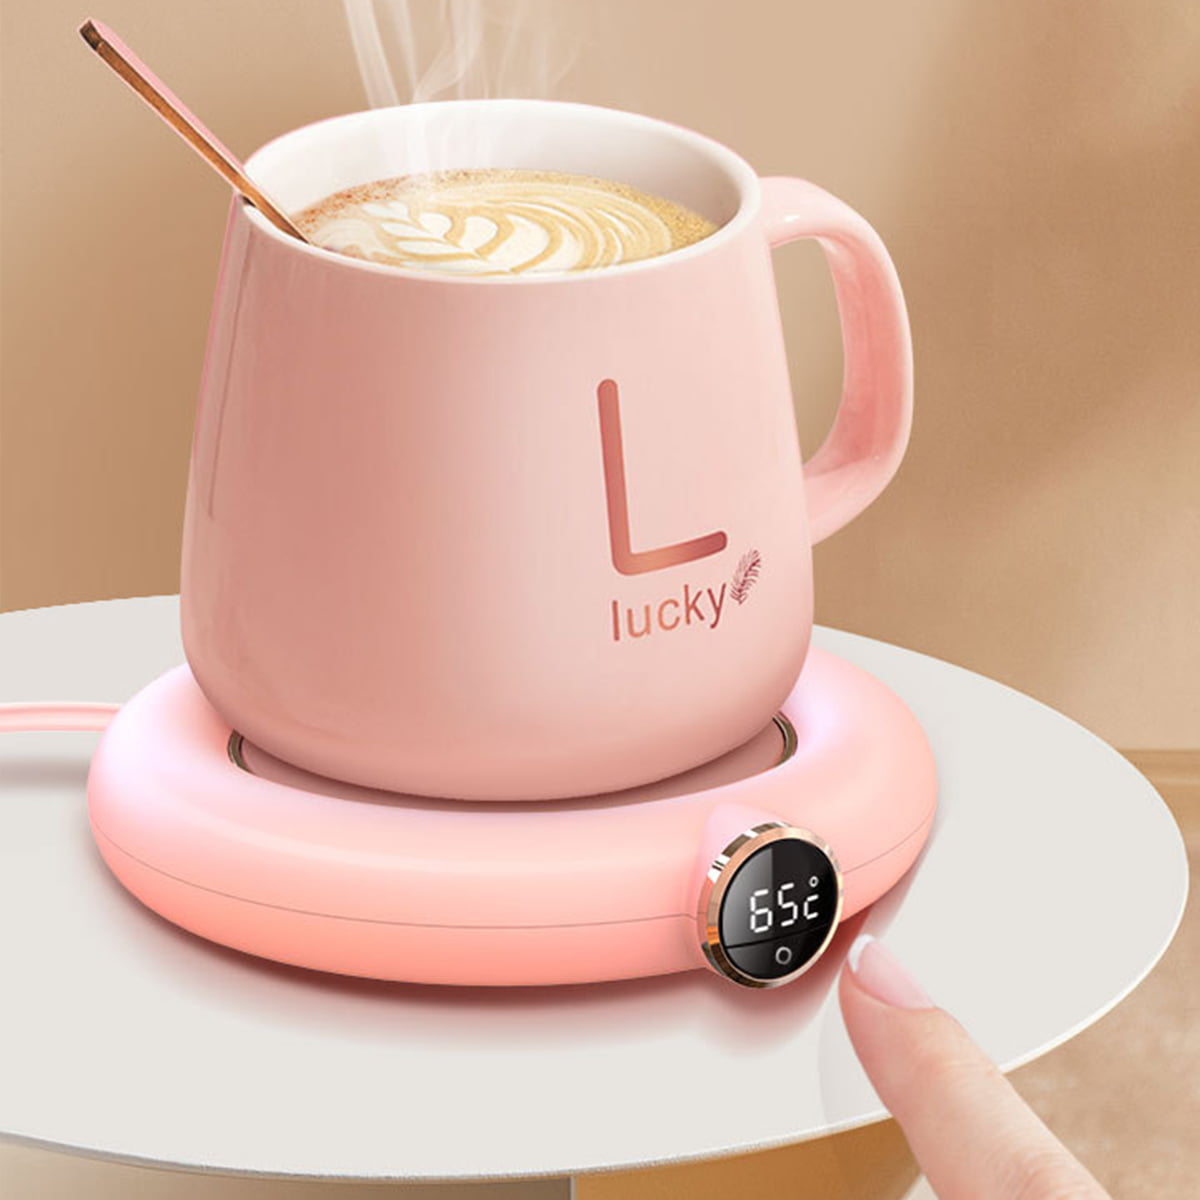 Cup and mug warmer – Consta